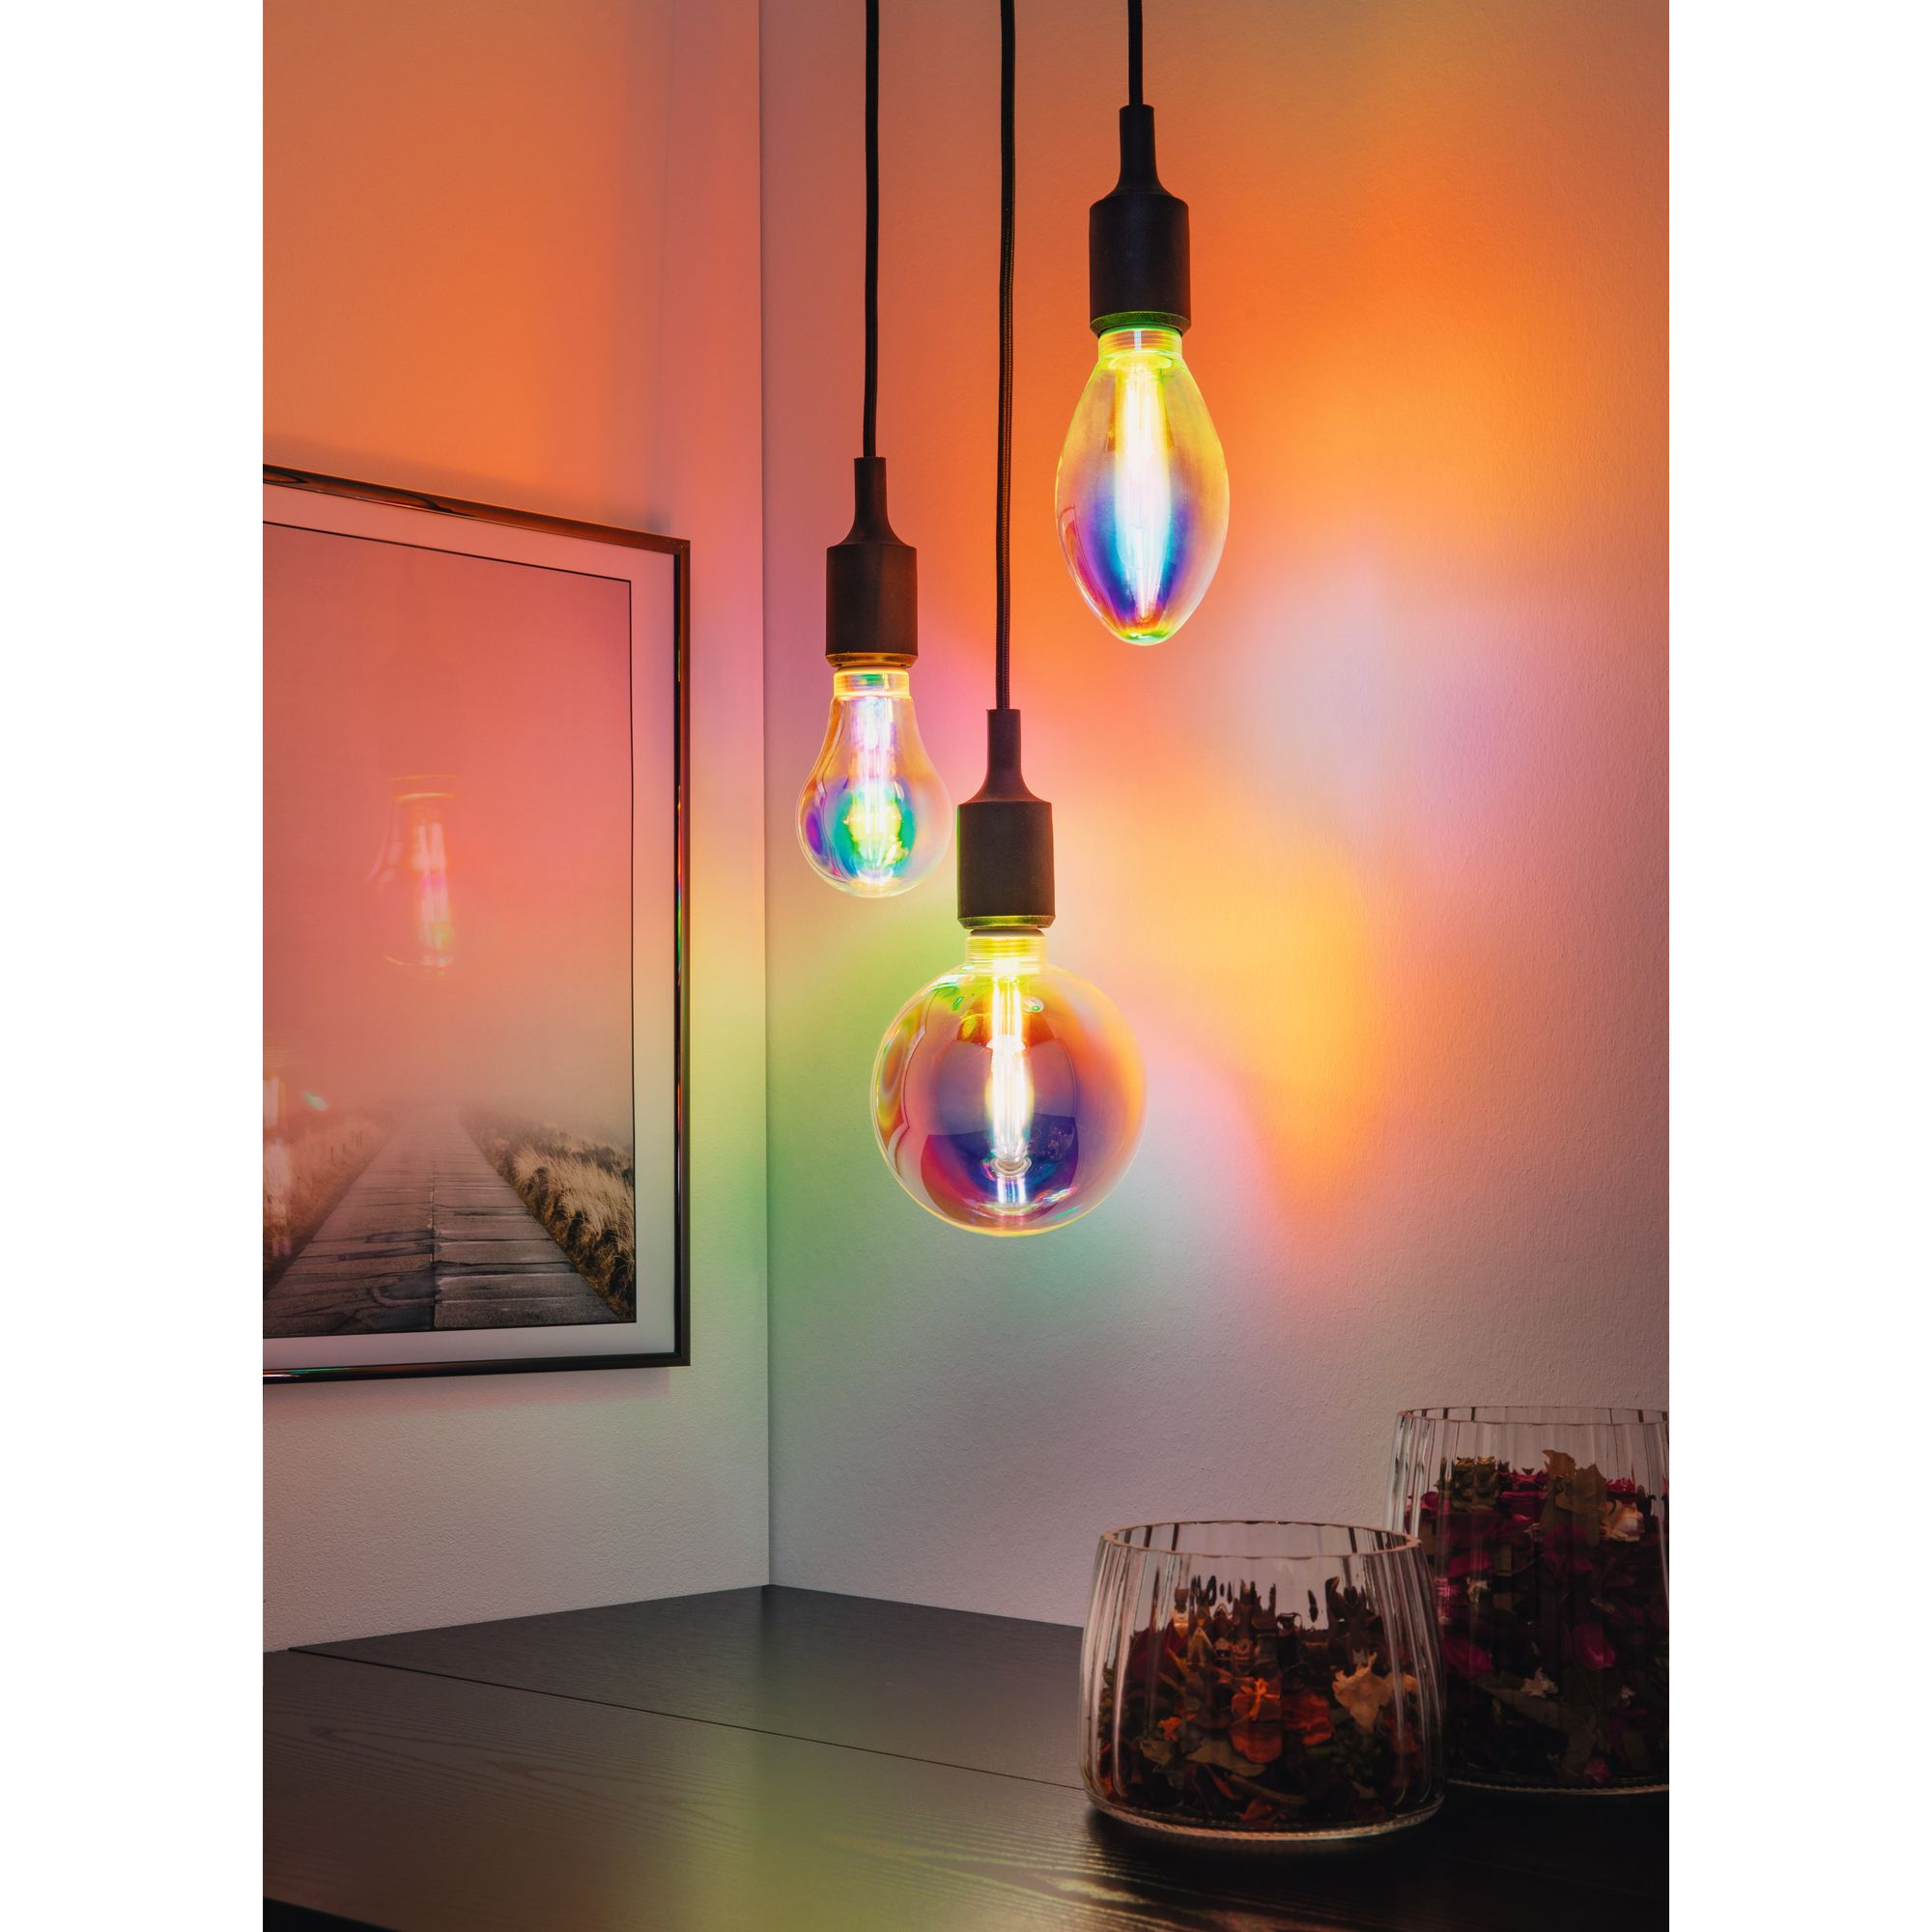 LED-Globelampe G125 E27 5W (40W) 470 lm spektraleffekt + product picture